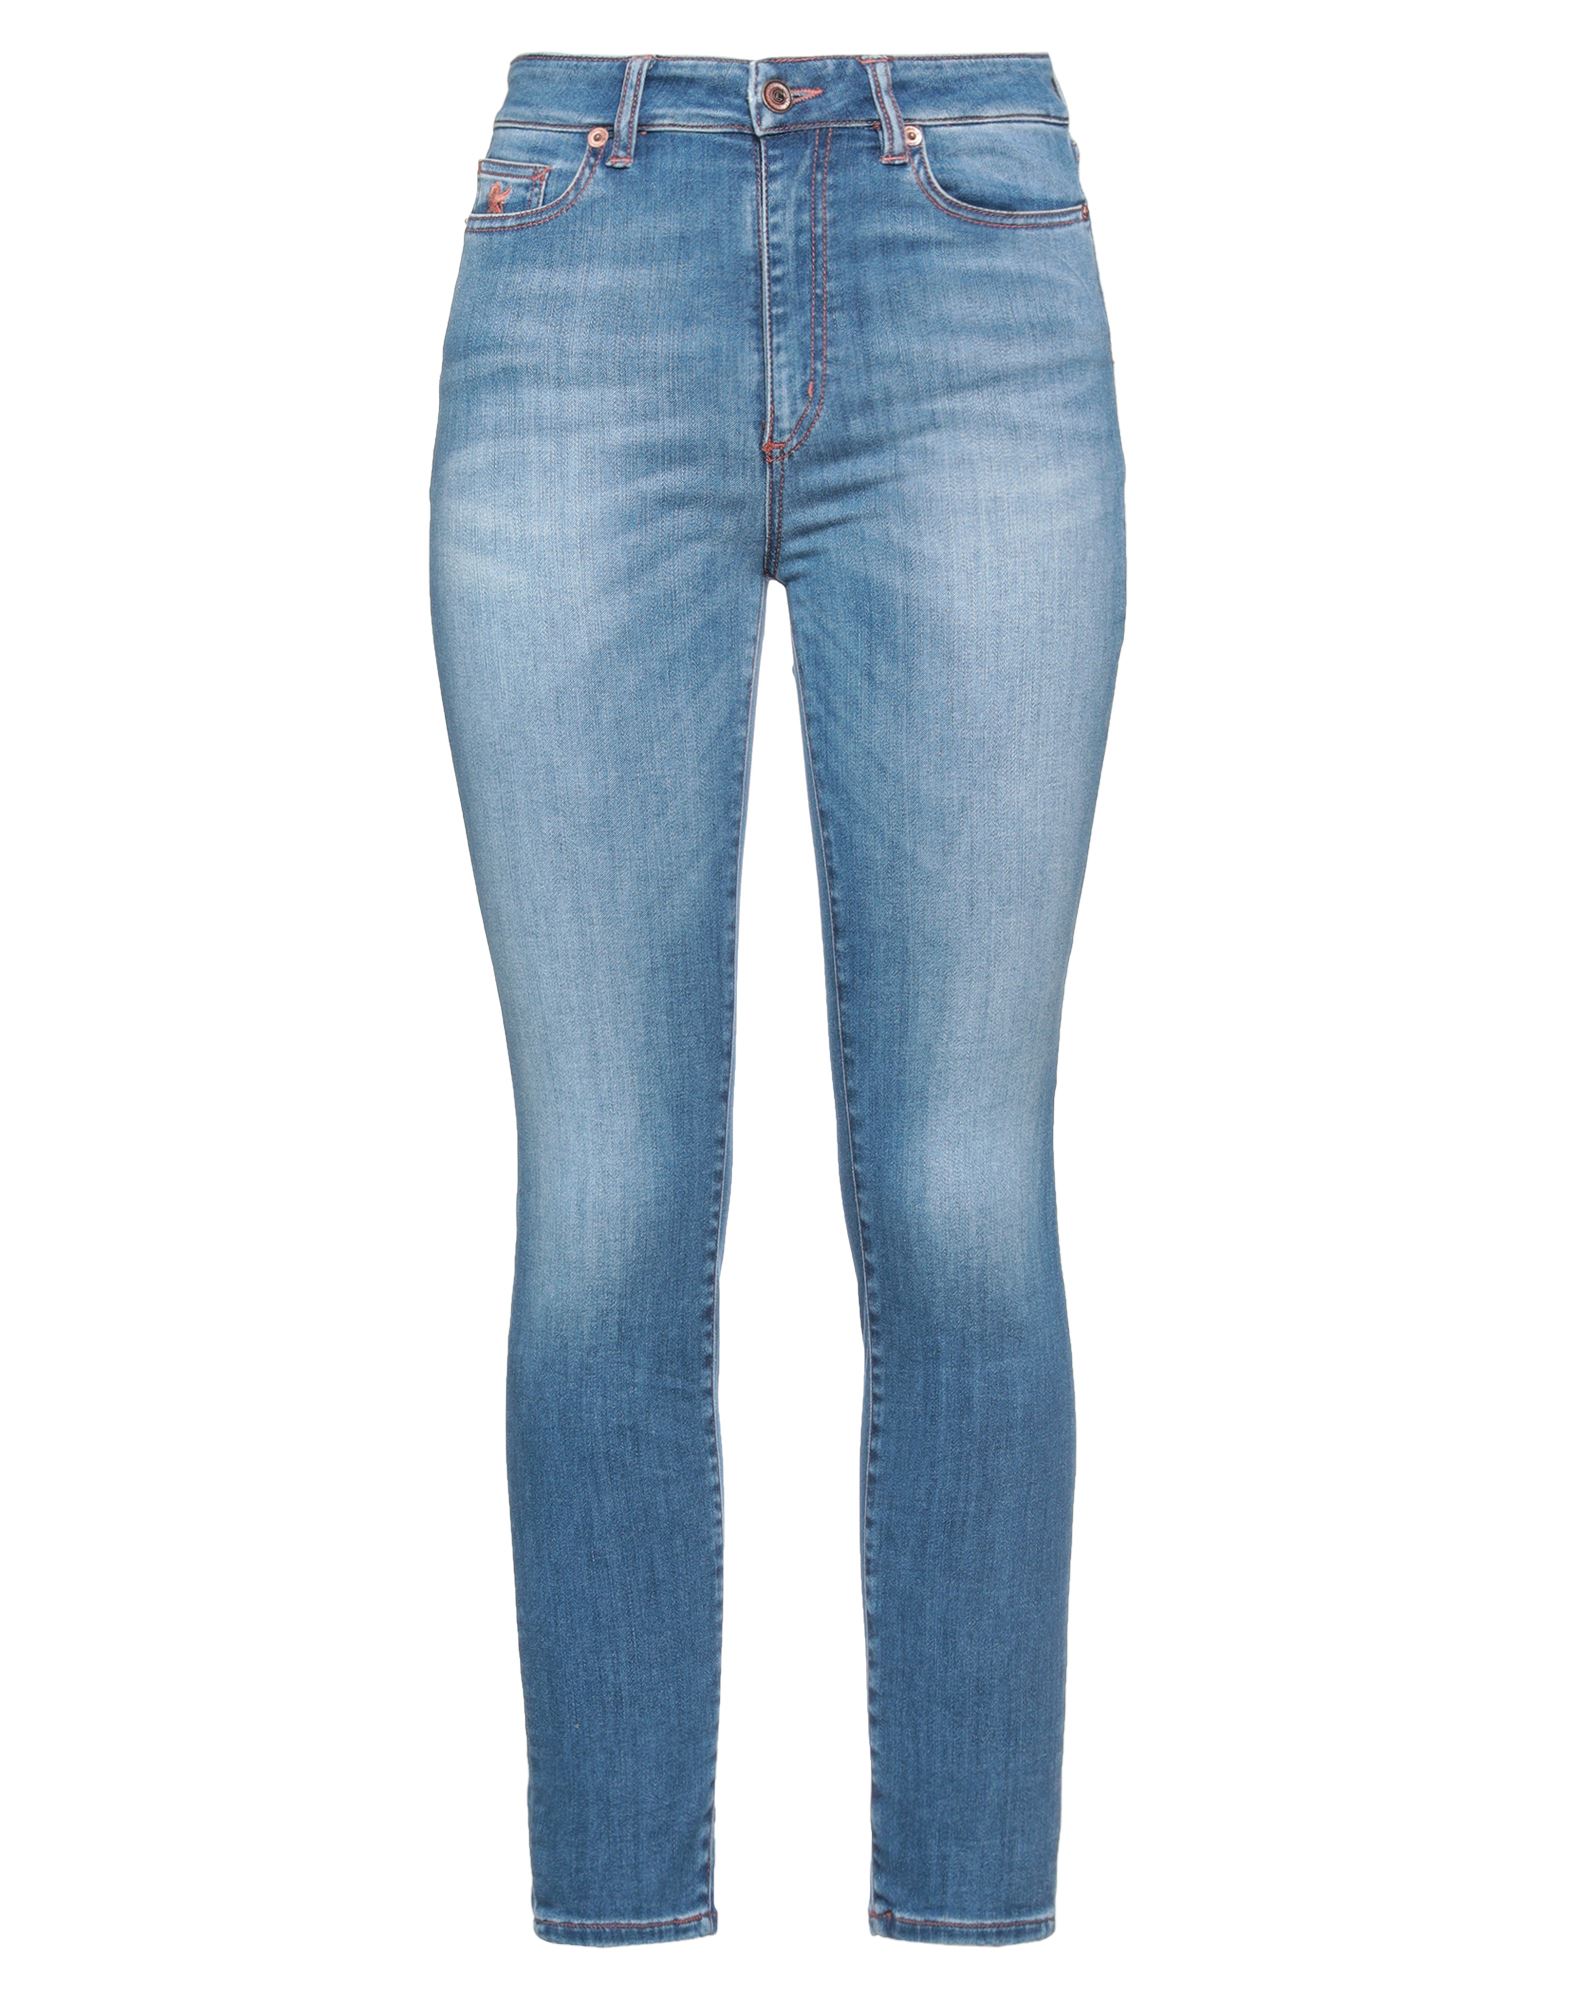 Avantgar Denim By European Culture Jeans In Blue